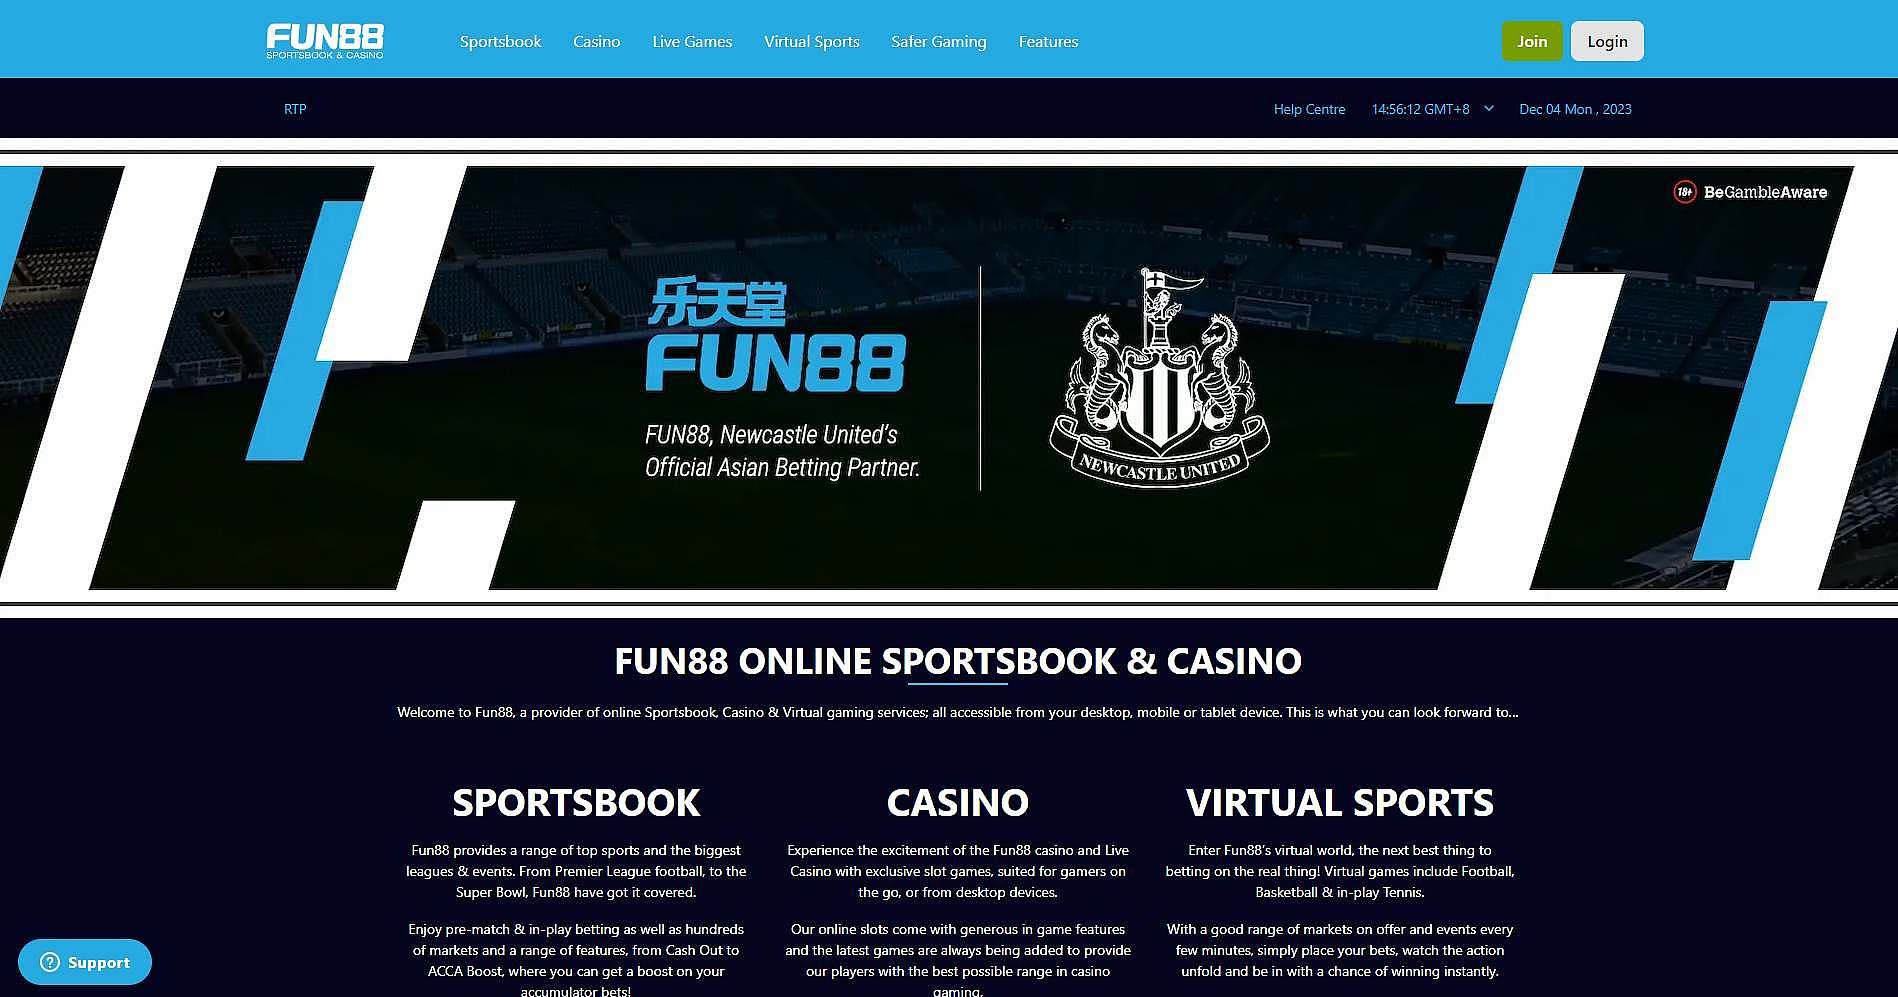 Fun88 online casino